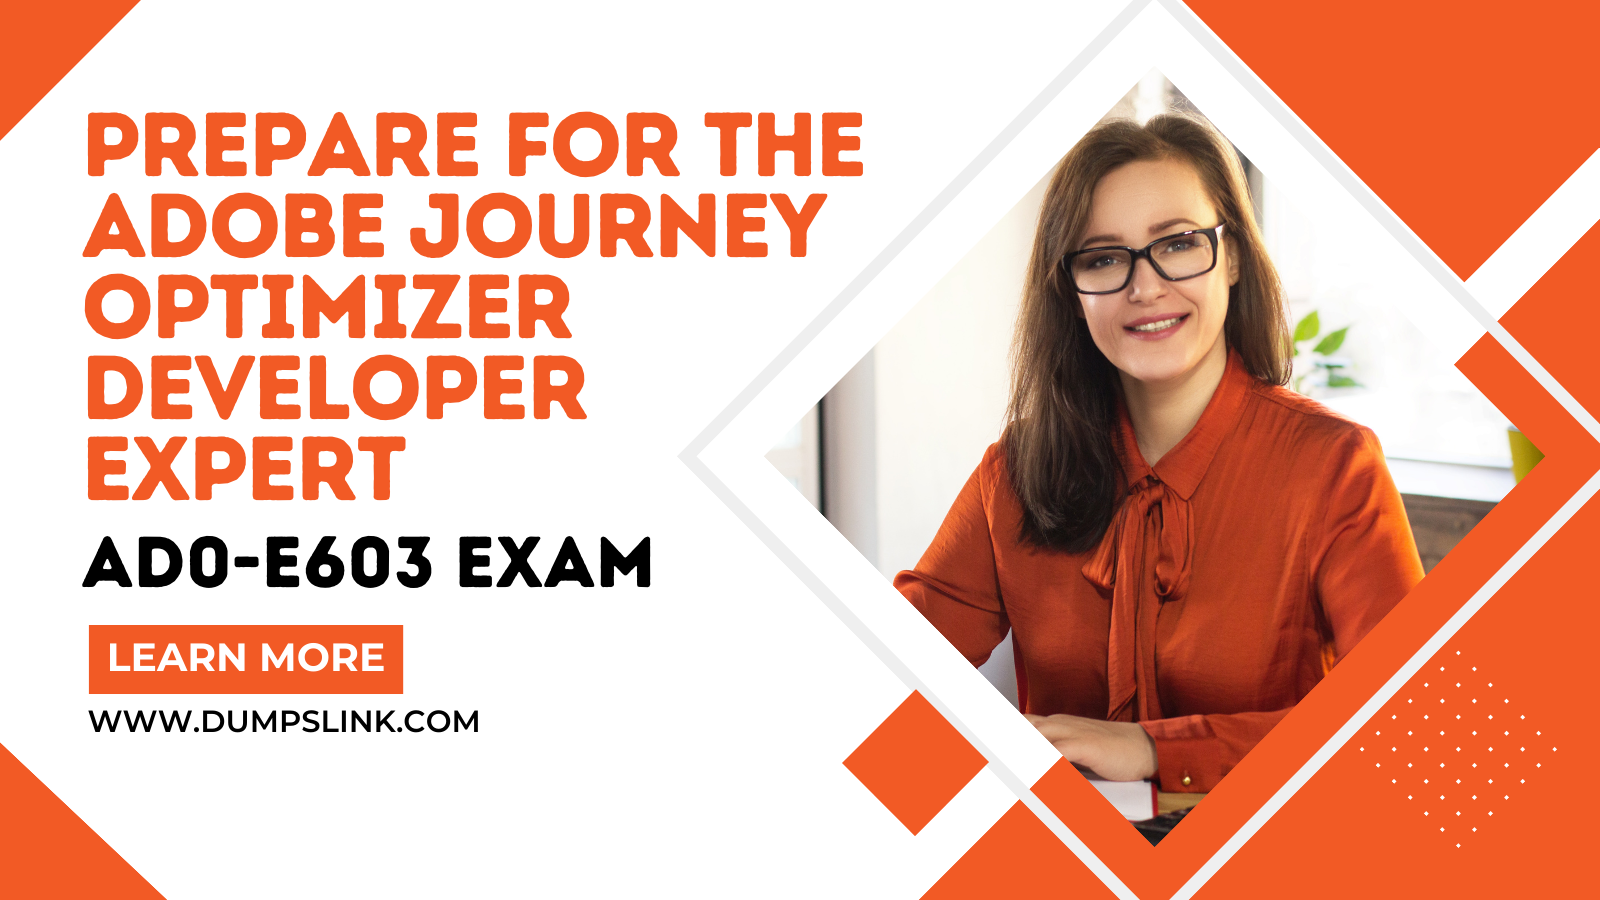 Adobe Journey Optimizer Developer Expert (AD0-E603) Exam